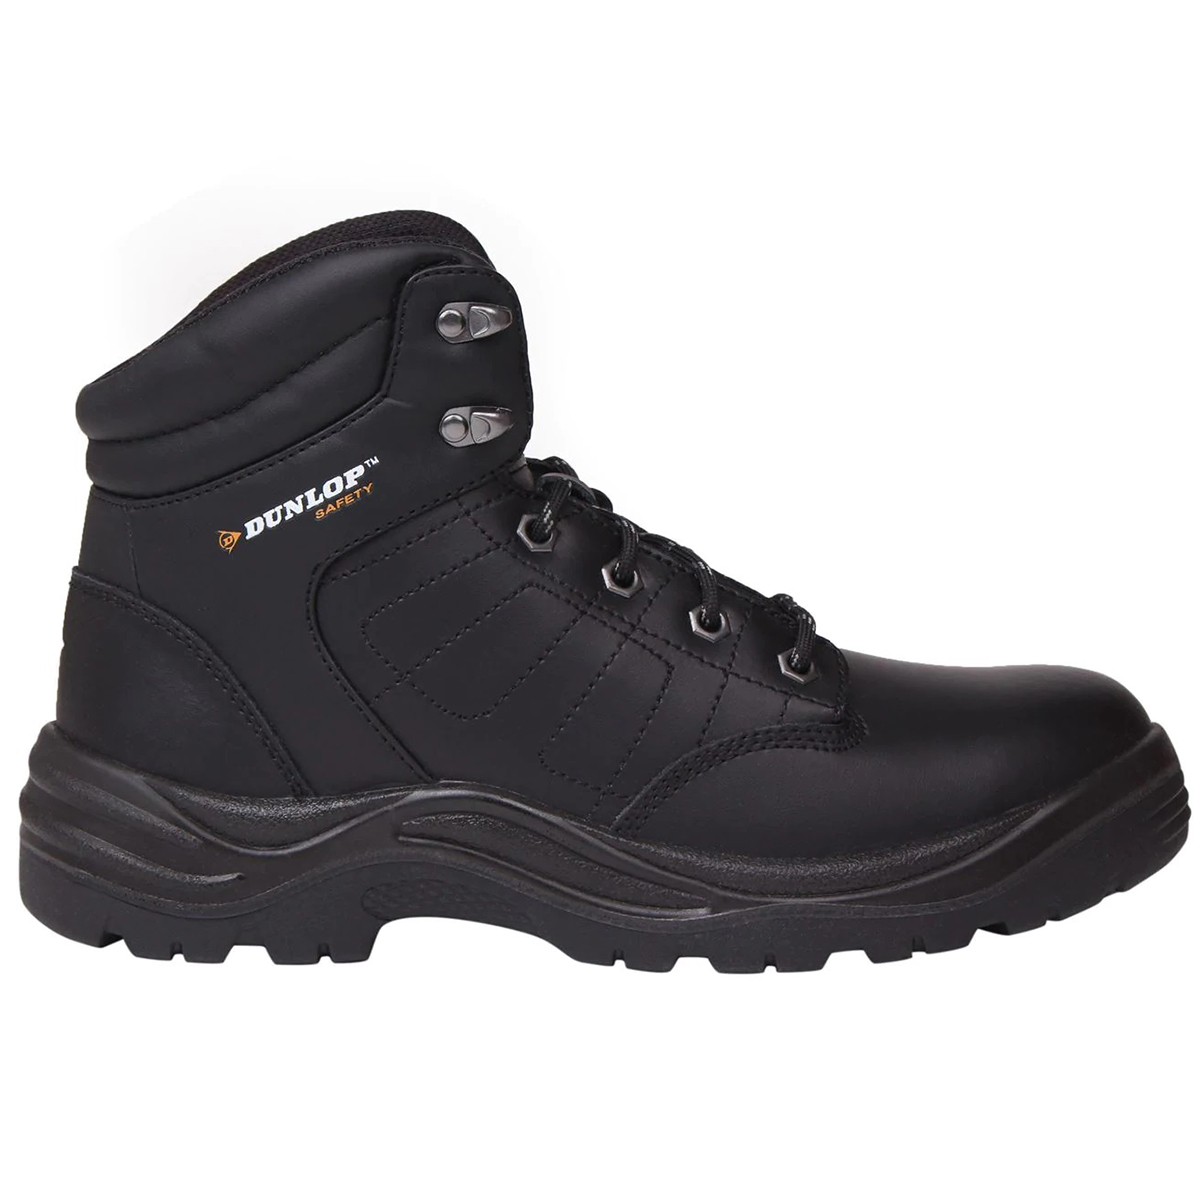 Dunlop Men's Dakota Steel Toe Work Boots - Black, 6.5